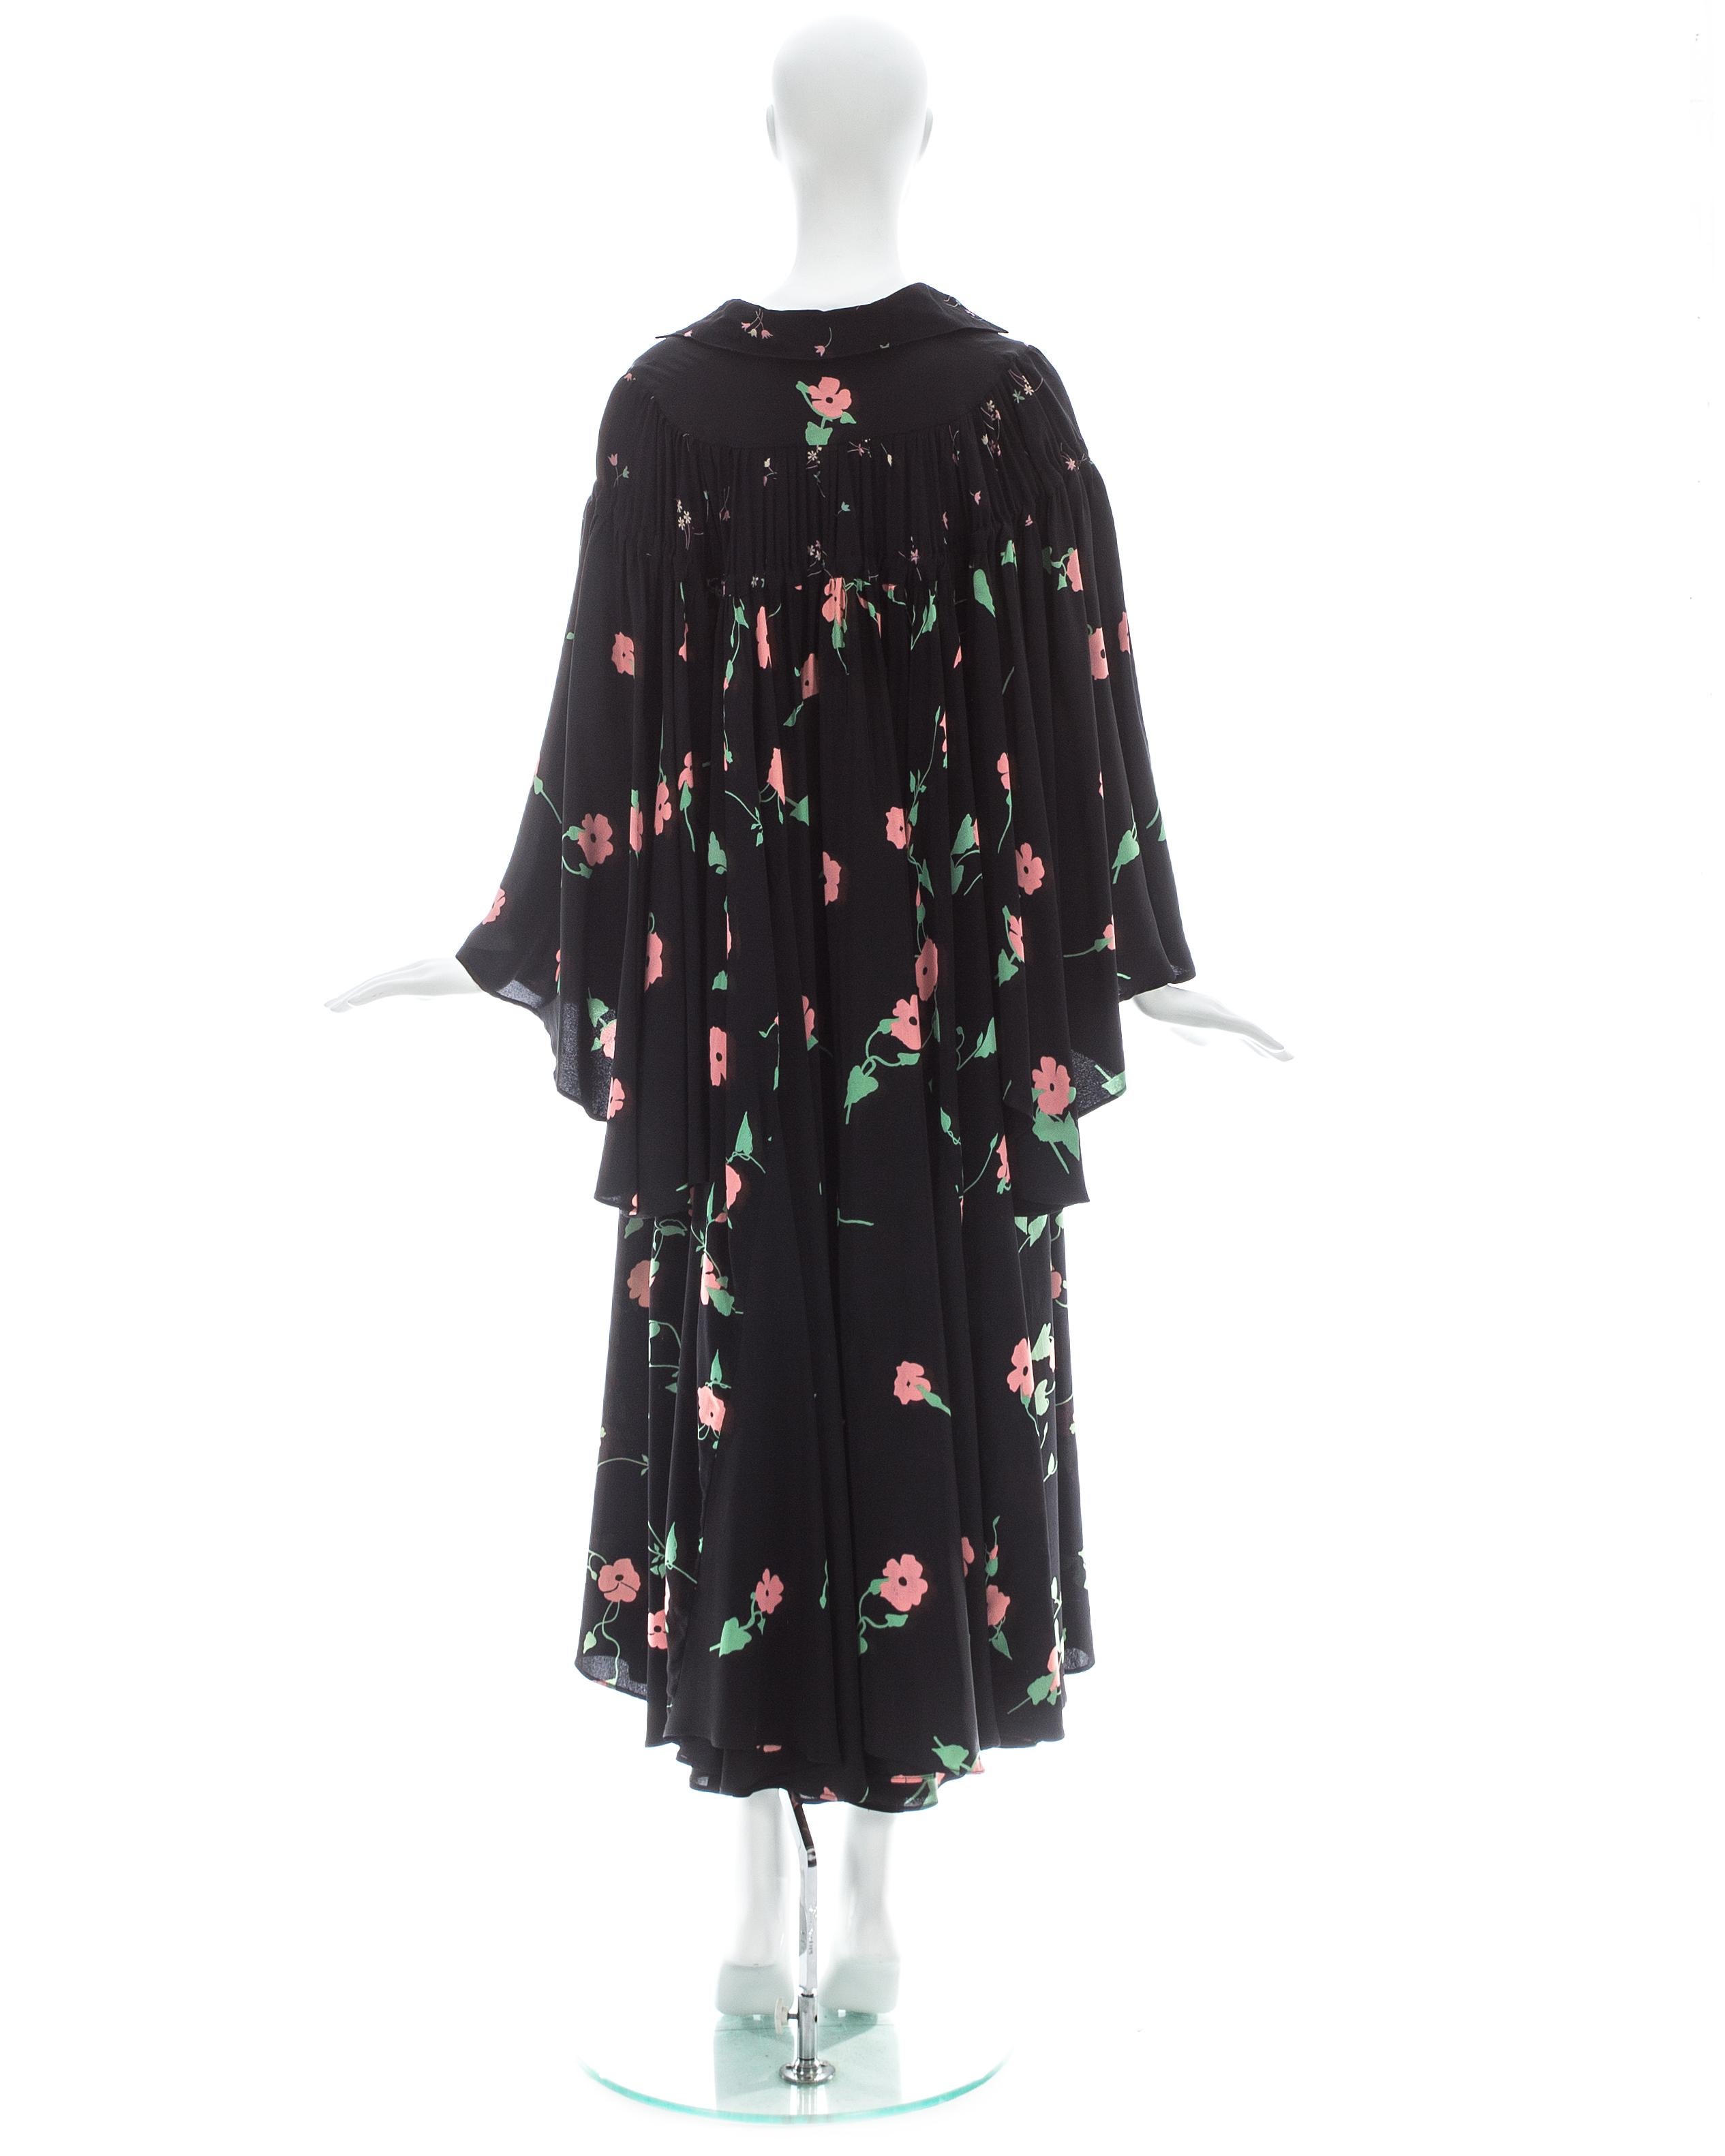 Ossie Clark black silk floral printed bell sleeve dress, ca. 1971 For Sale 2